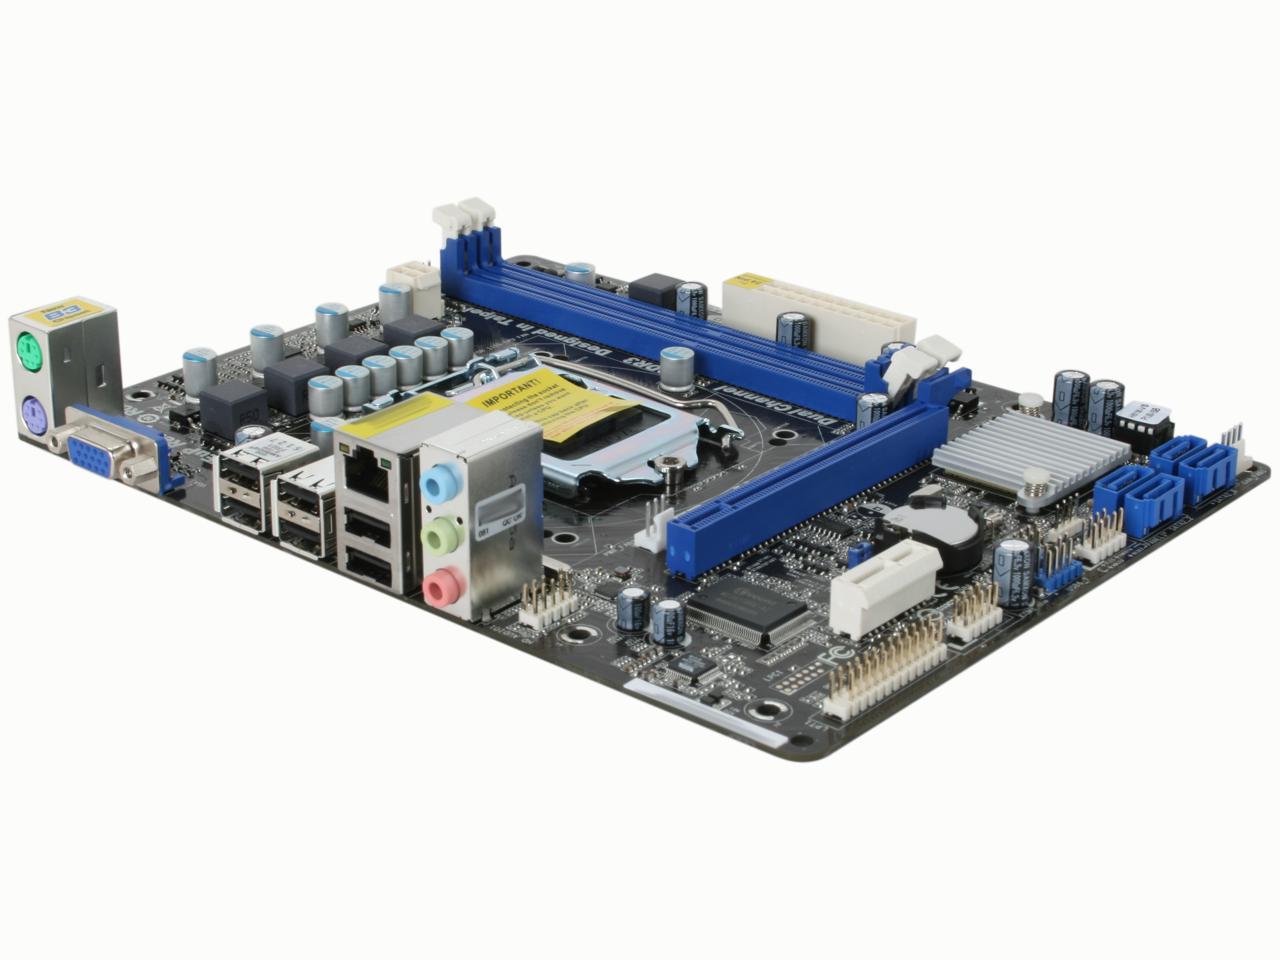 ASRock H61M-VS LGA 1155 Micro ATX Intel Motherboard - Newegg.com